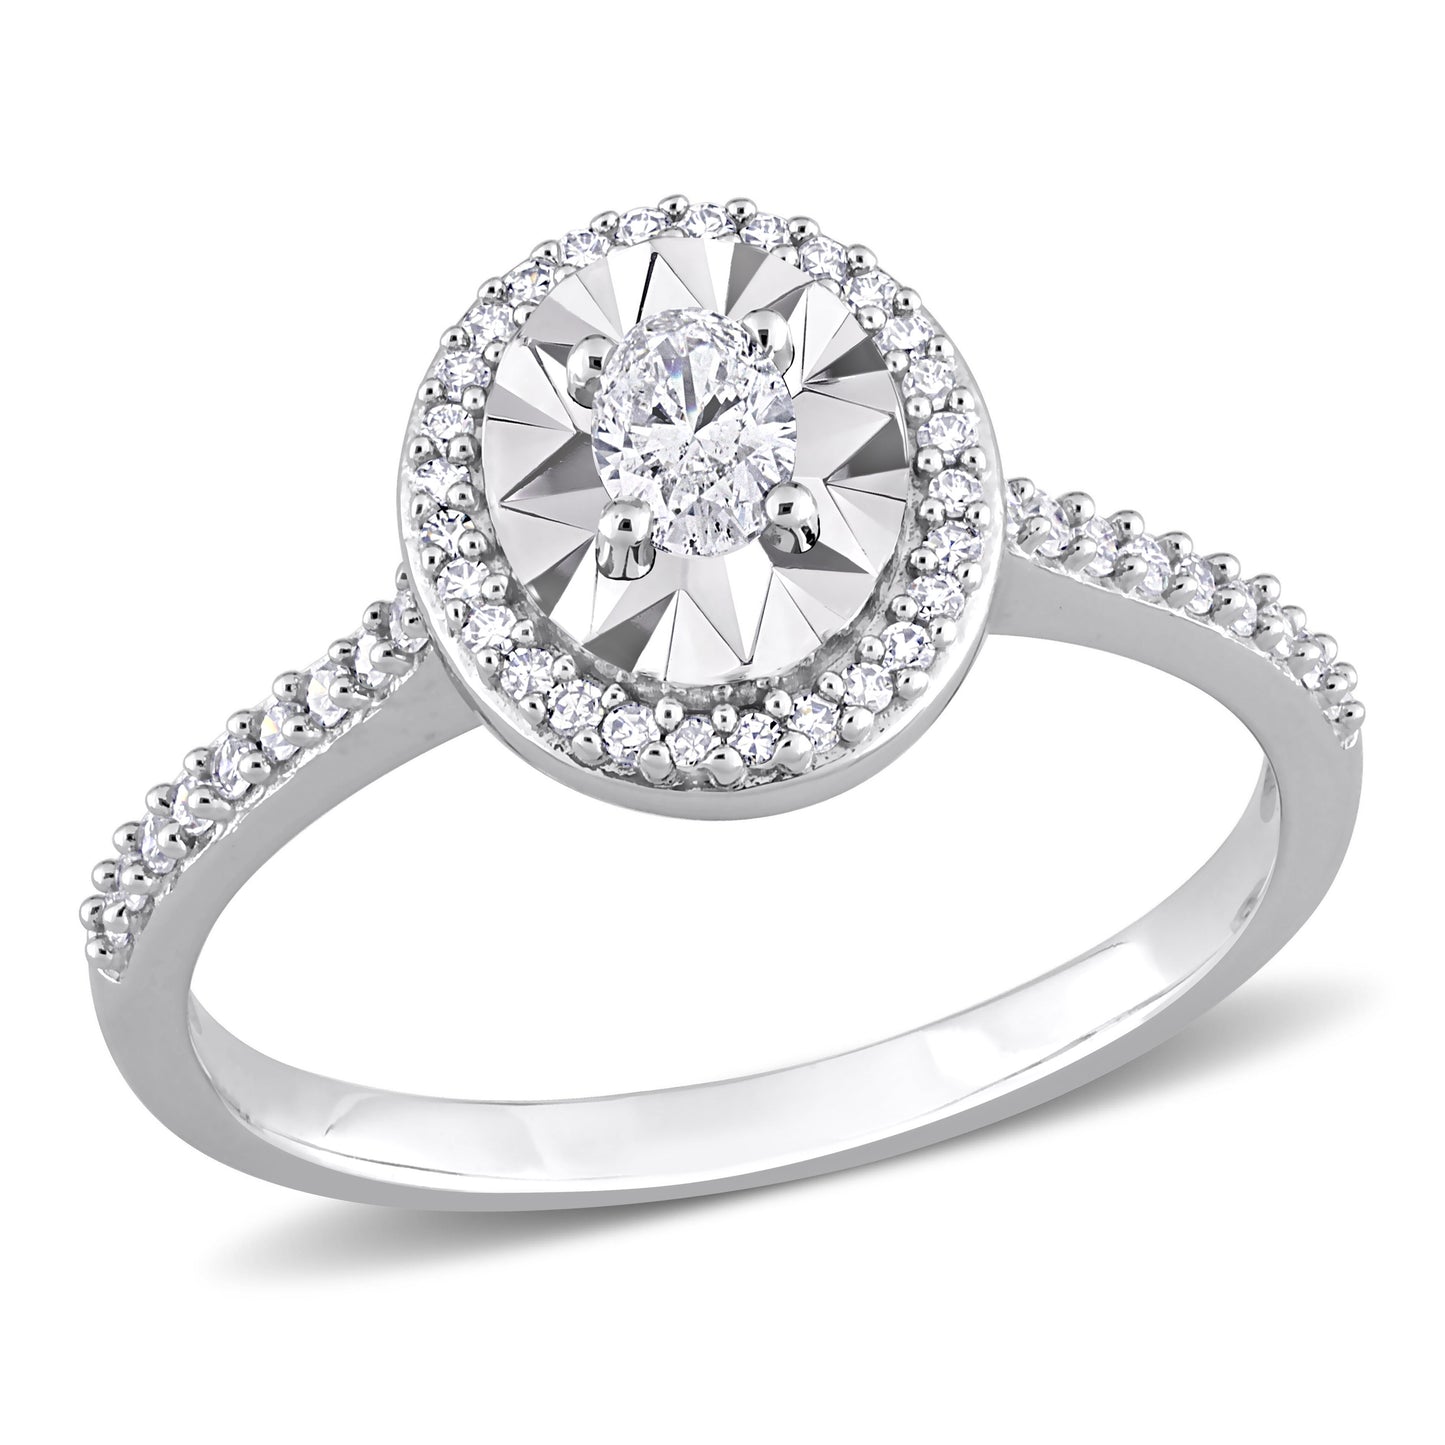 Oval Halo Diamond Ring in 14k White Gold